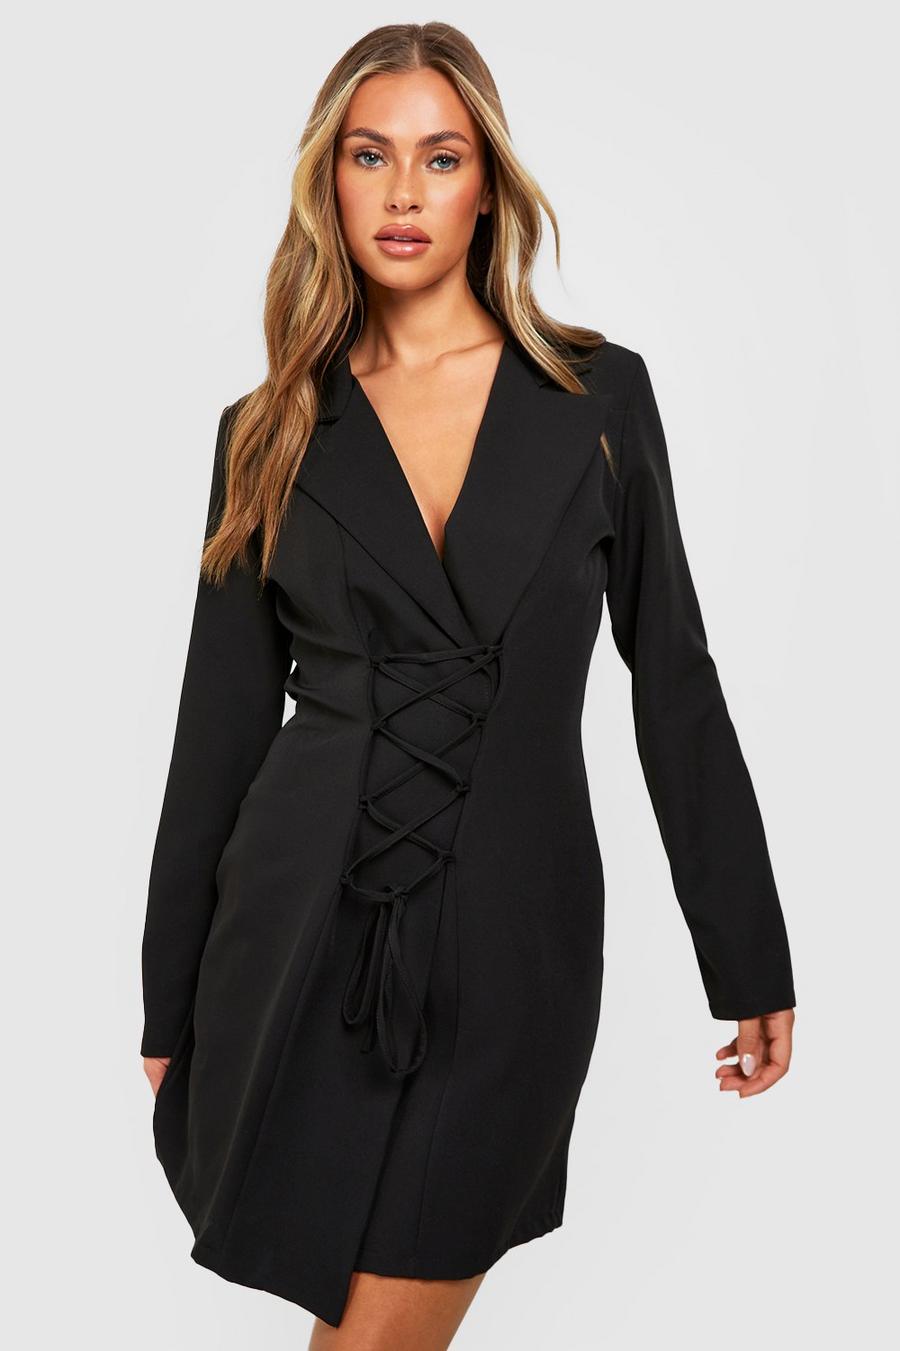 Black Lace Up Front Asymmetric Blazer Dress